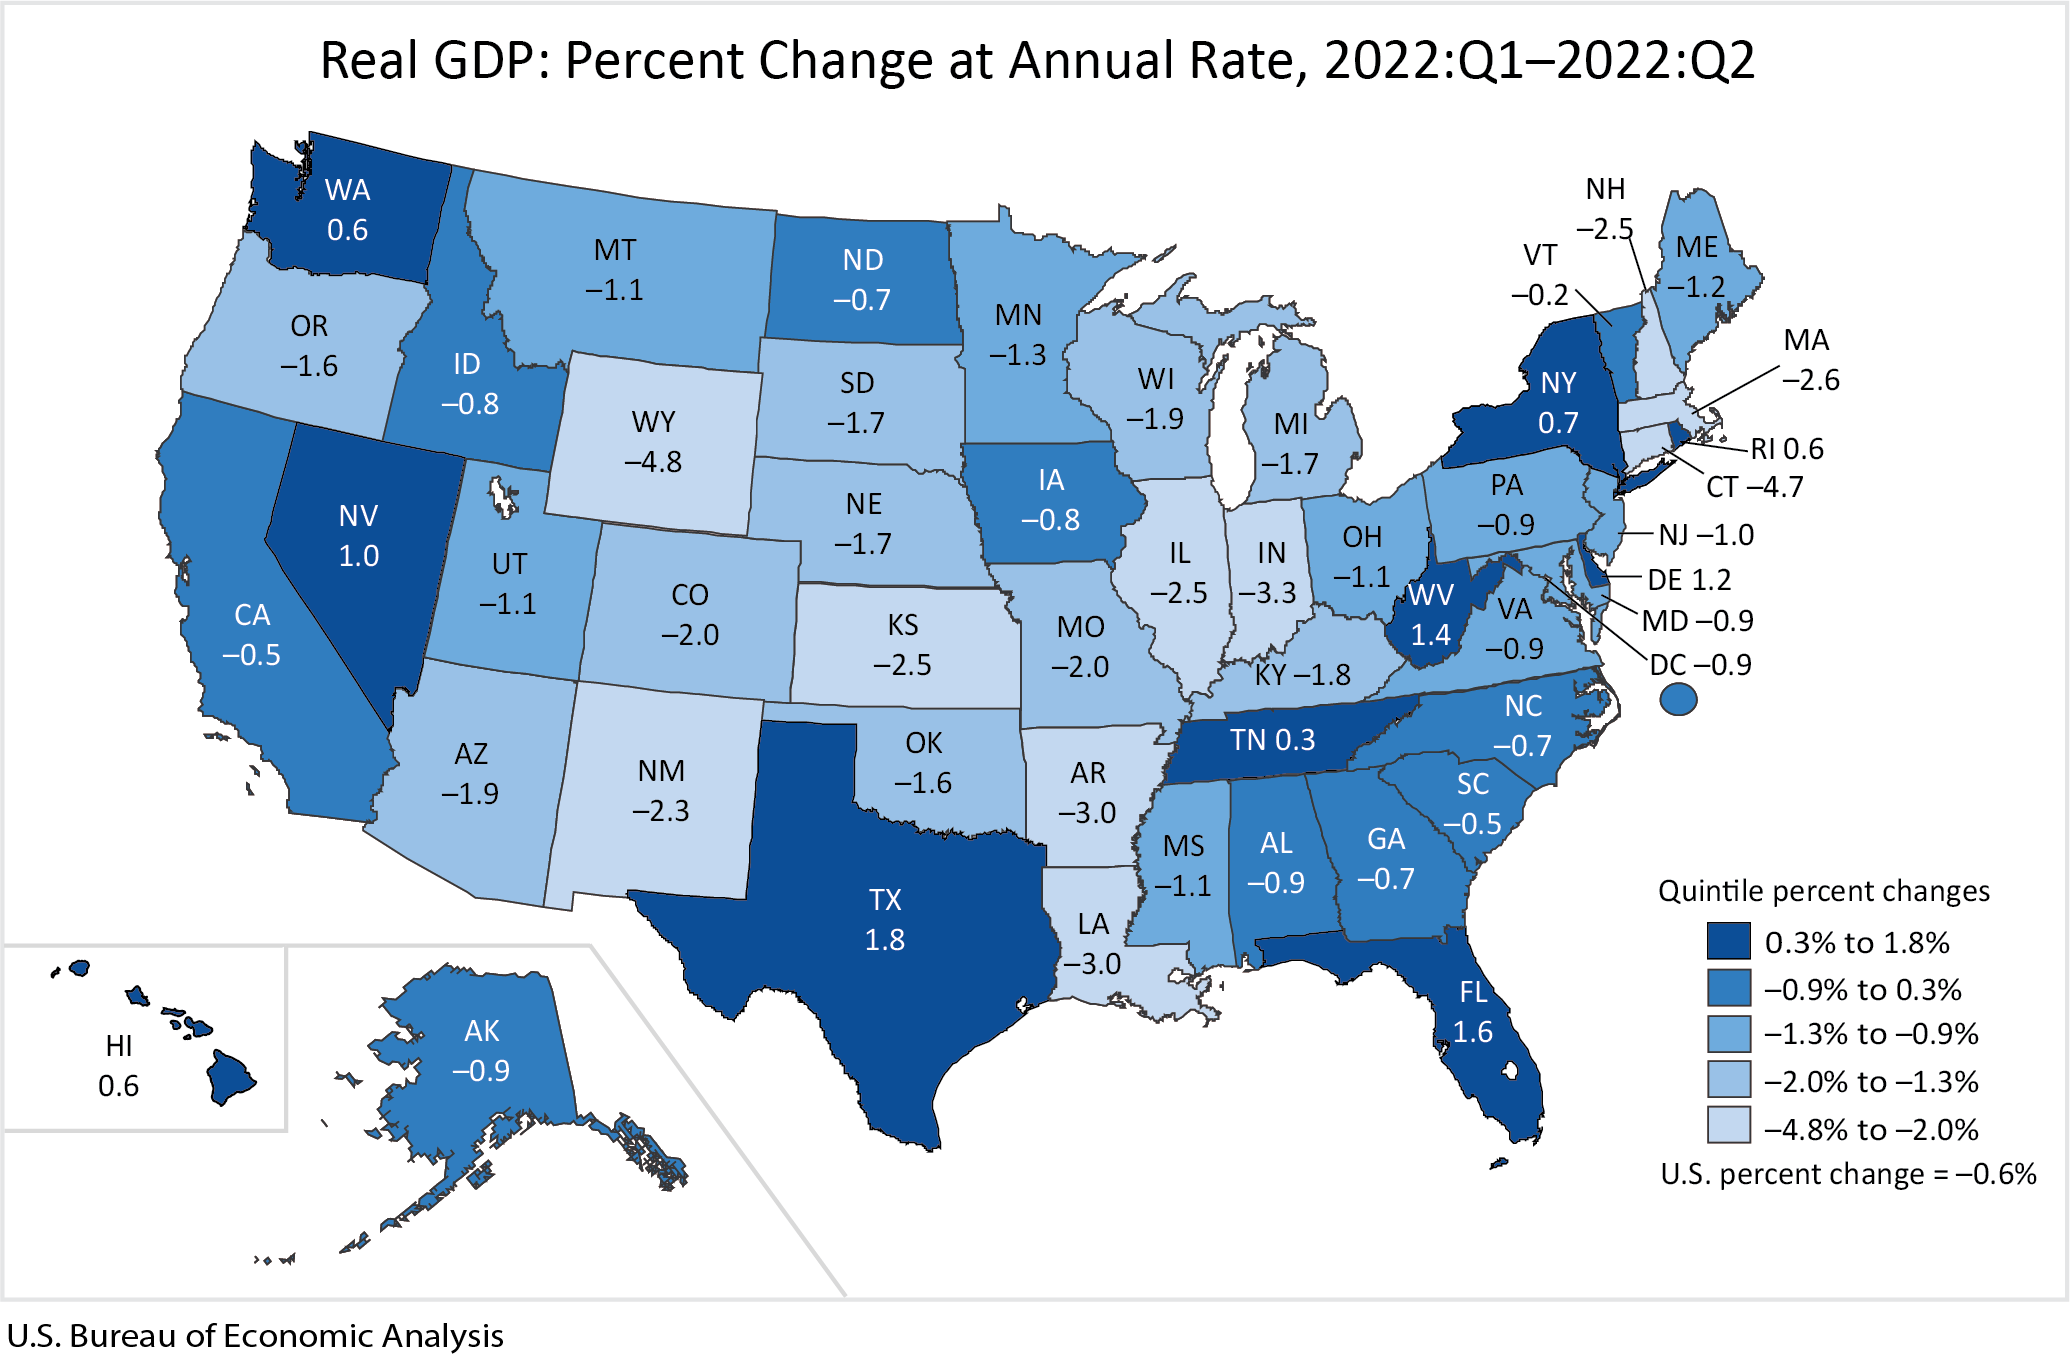 GDP by State U.S. Bureau of Economic Analysis (BEA)